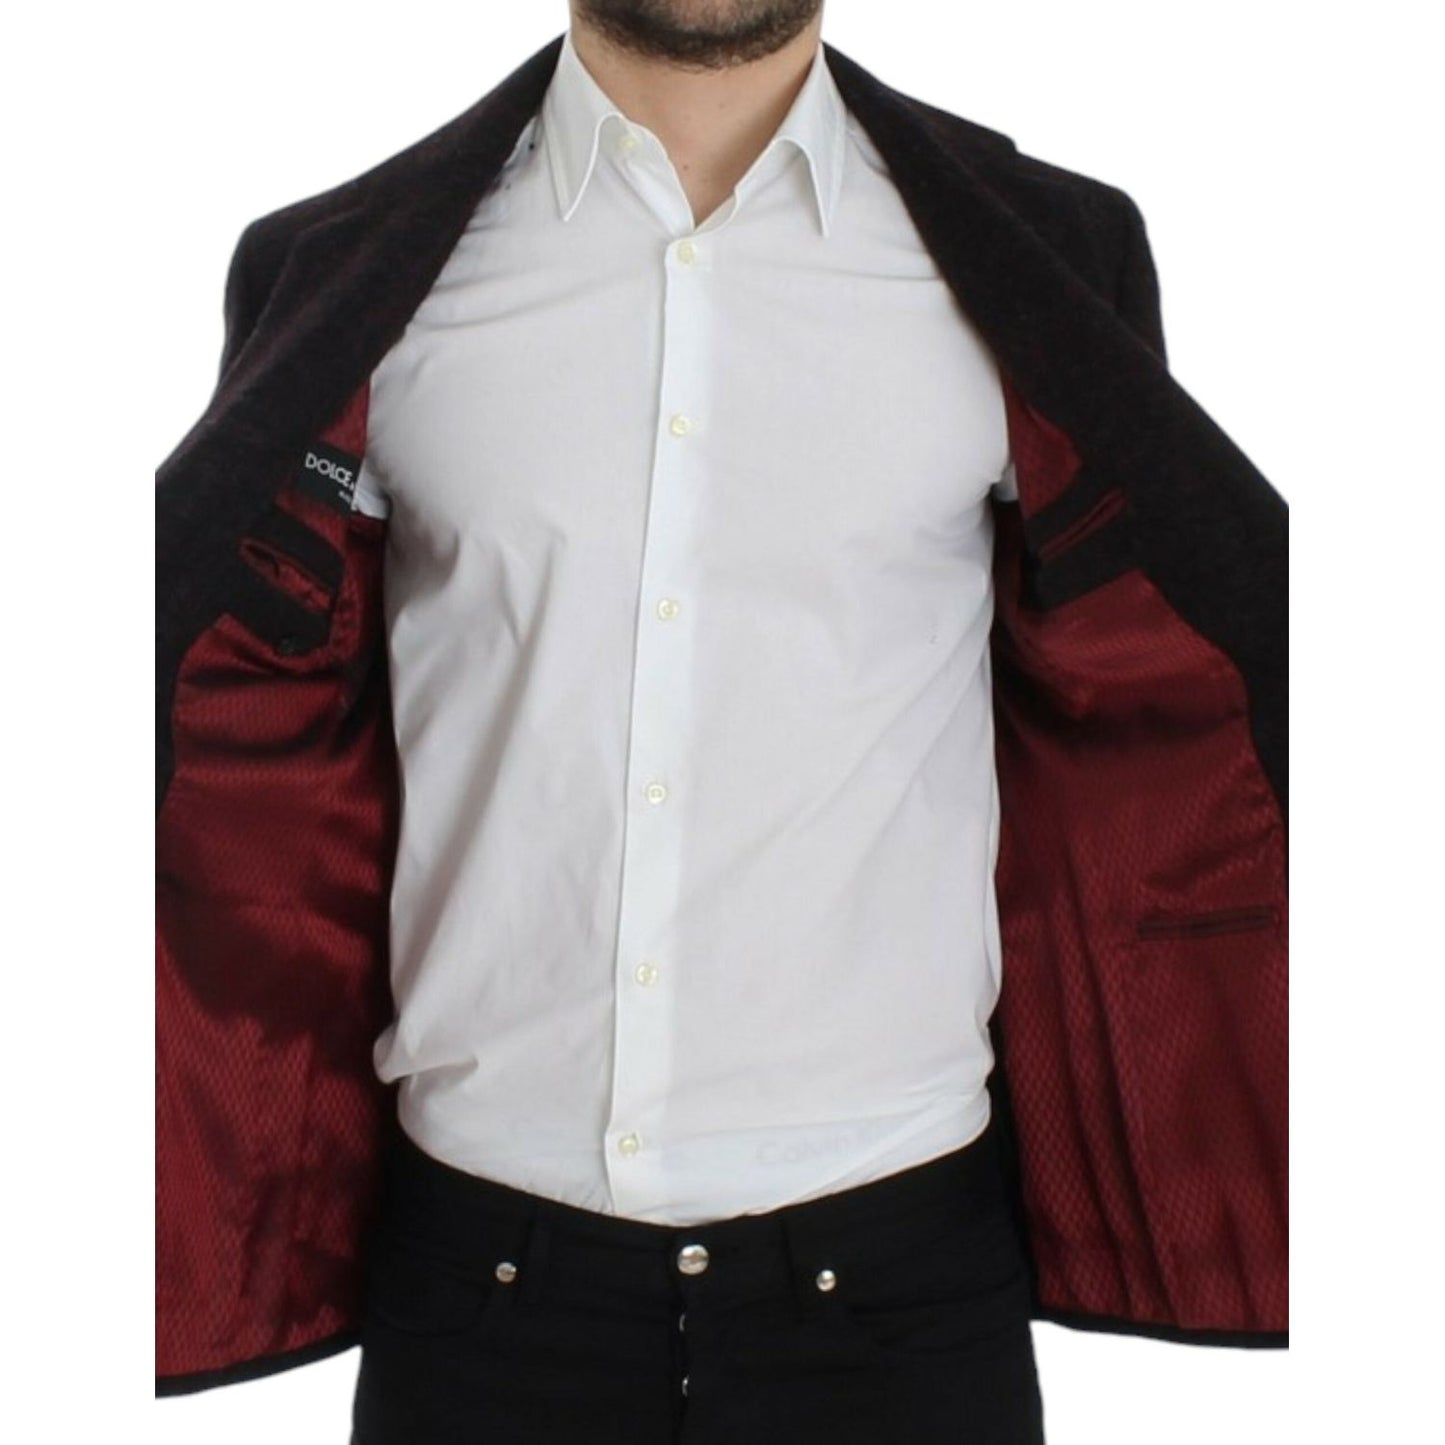 Dolce & Gabbana Bordeaux Alpaga Two-Button Blazer Jacket bordeaux-alpaga-two-button-blazer